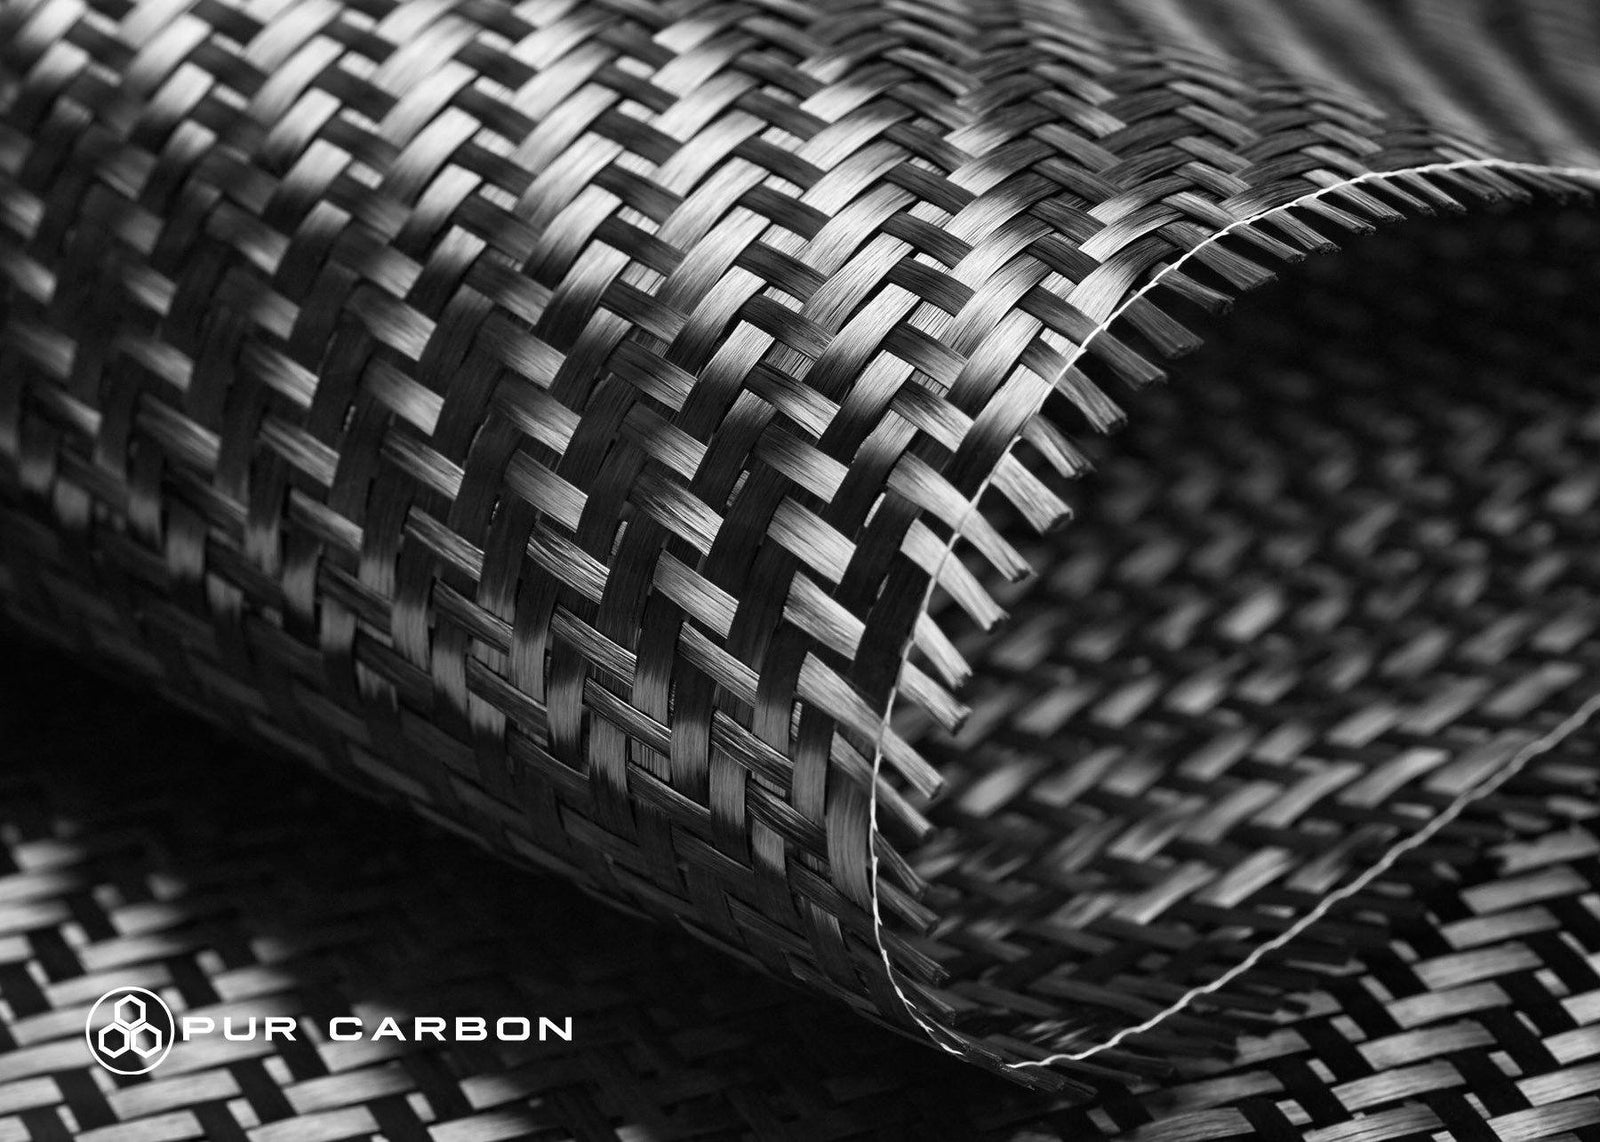 Carbon Fiber Manufacturing Companies